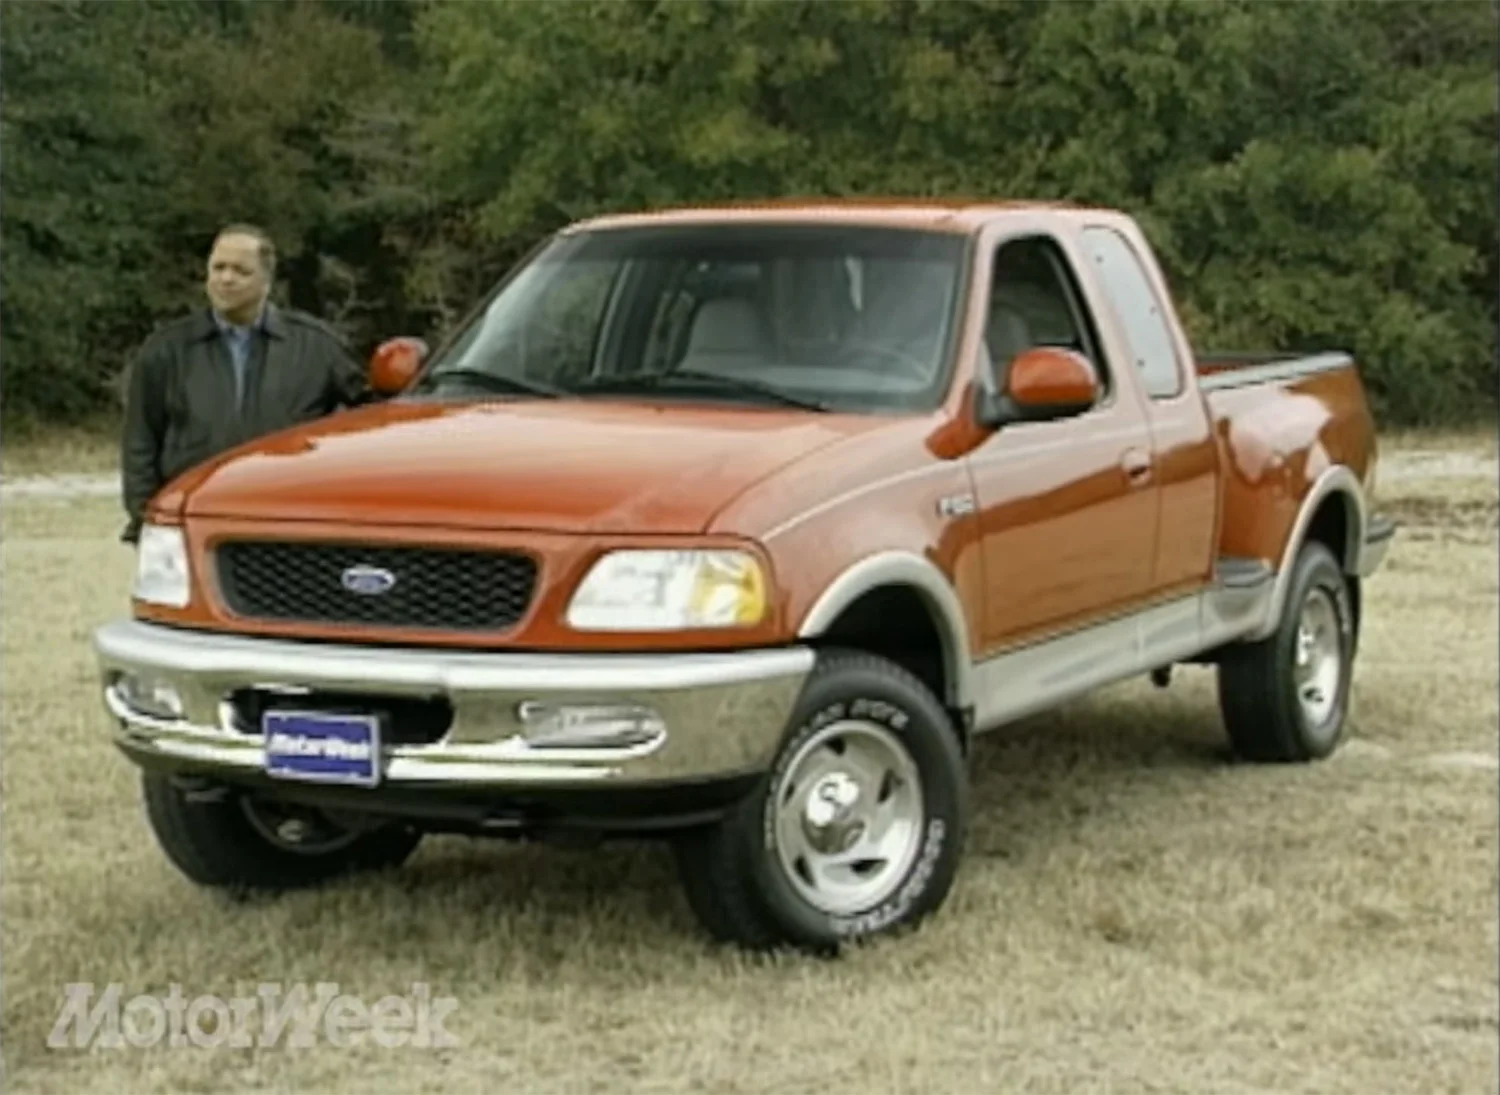 https://fordauthority.com/wp-content/uploads/2022/08/MotorWeek-Retro-Review-1997-Ford-F-150-video-screenshot-003.jpg